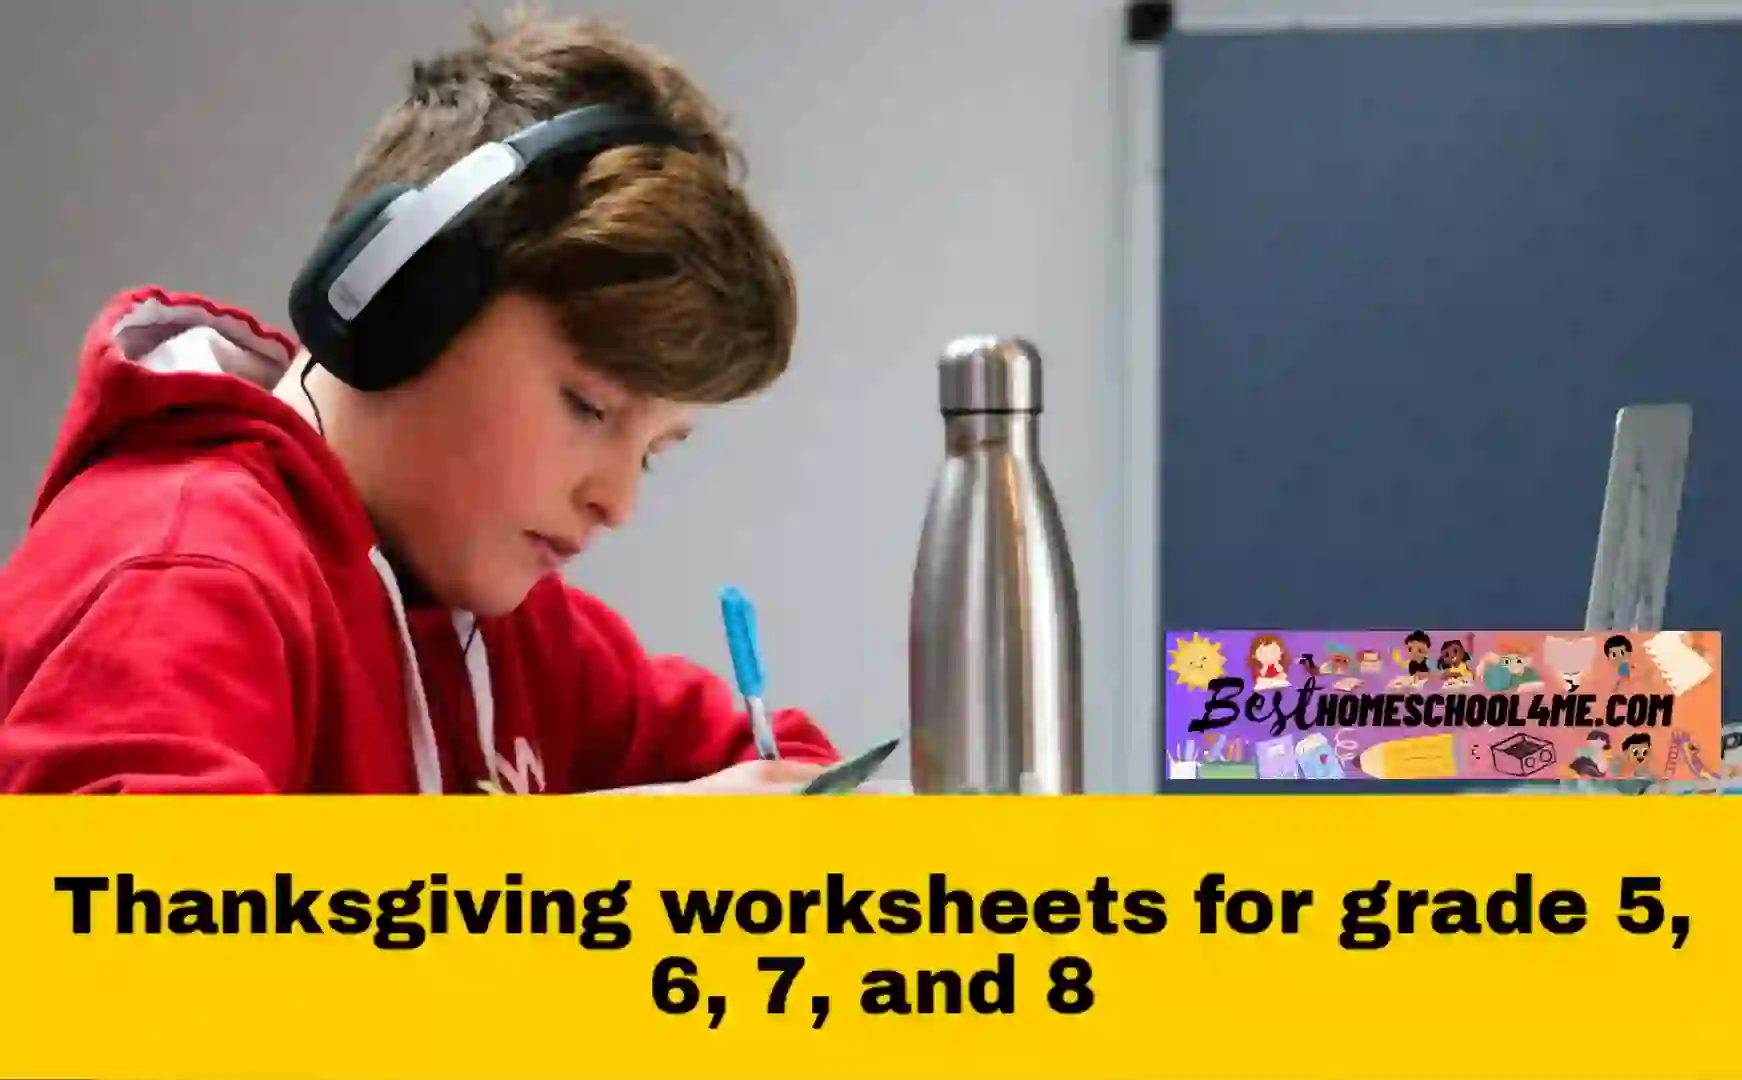 Thanksgiving worksheets for fifth grade kids, Thanksgiving worksheets for fifth grade students